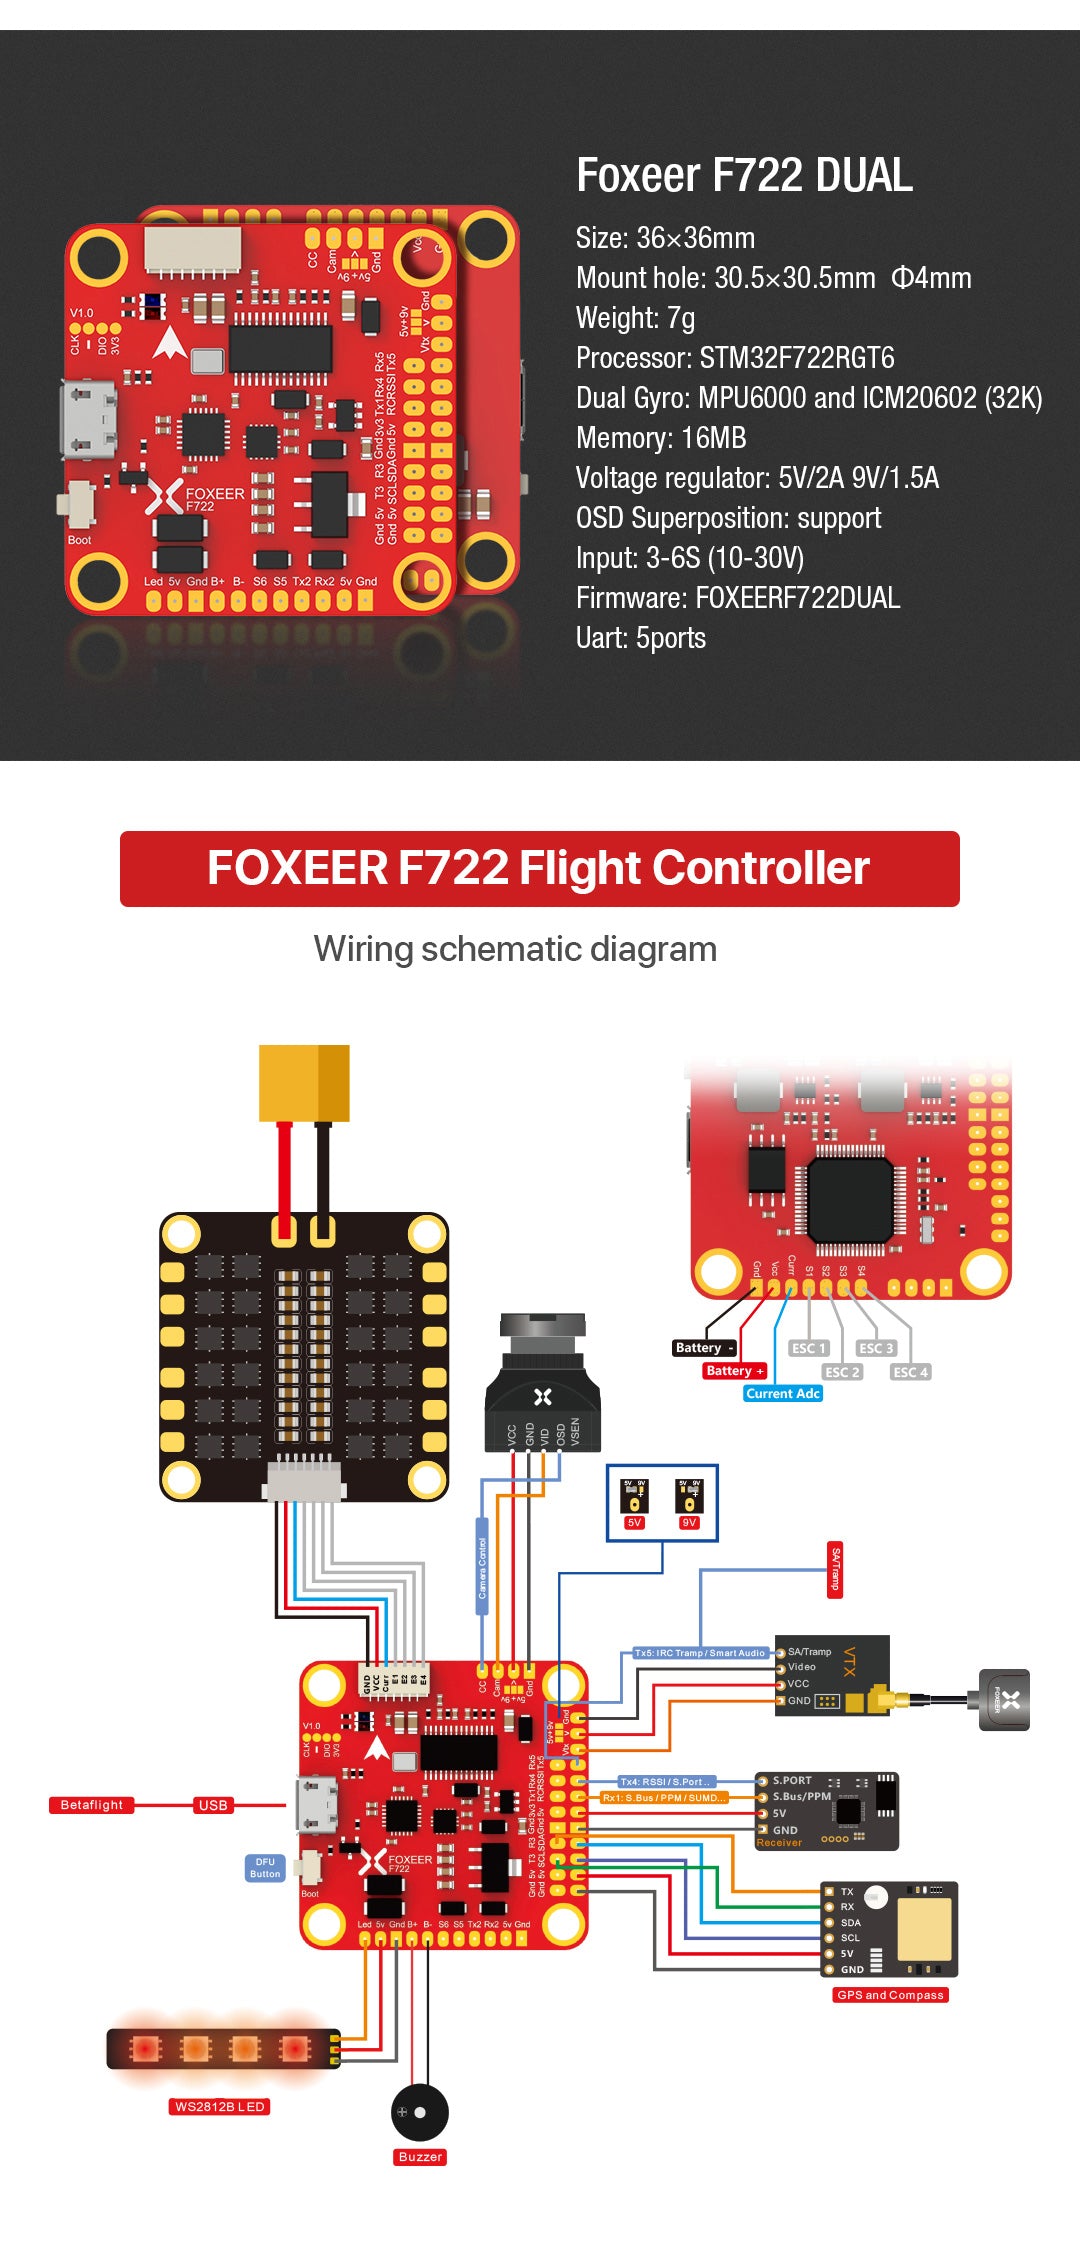 Foxeer F722 Dual Flight Controller